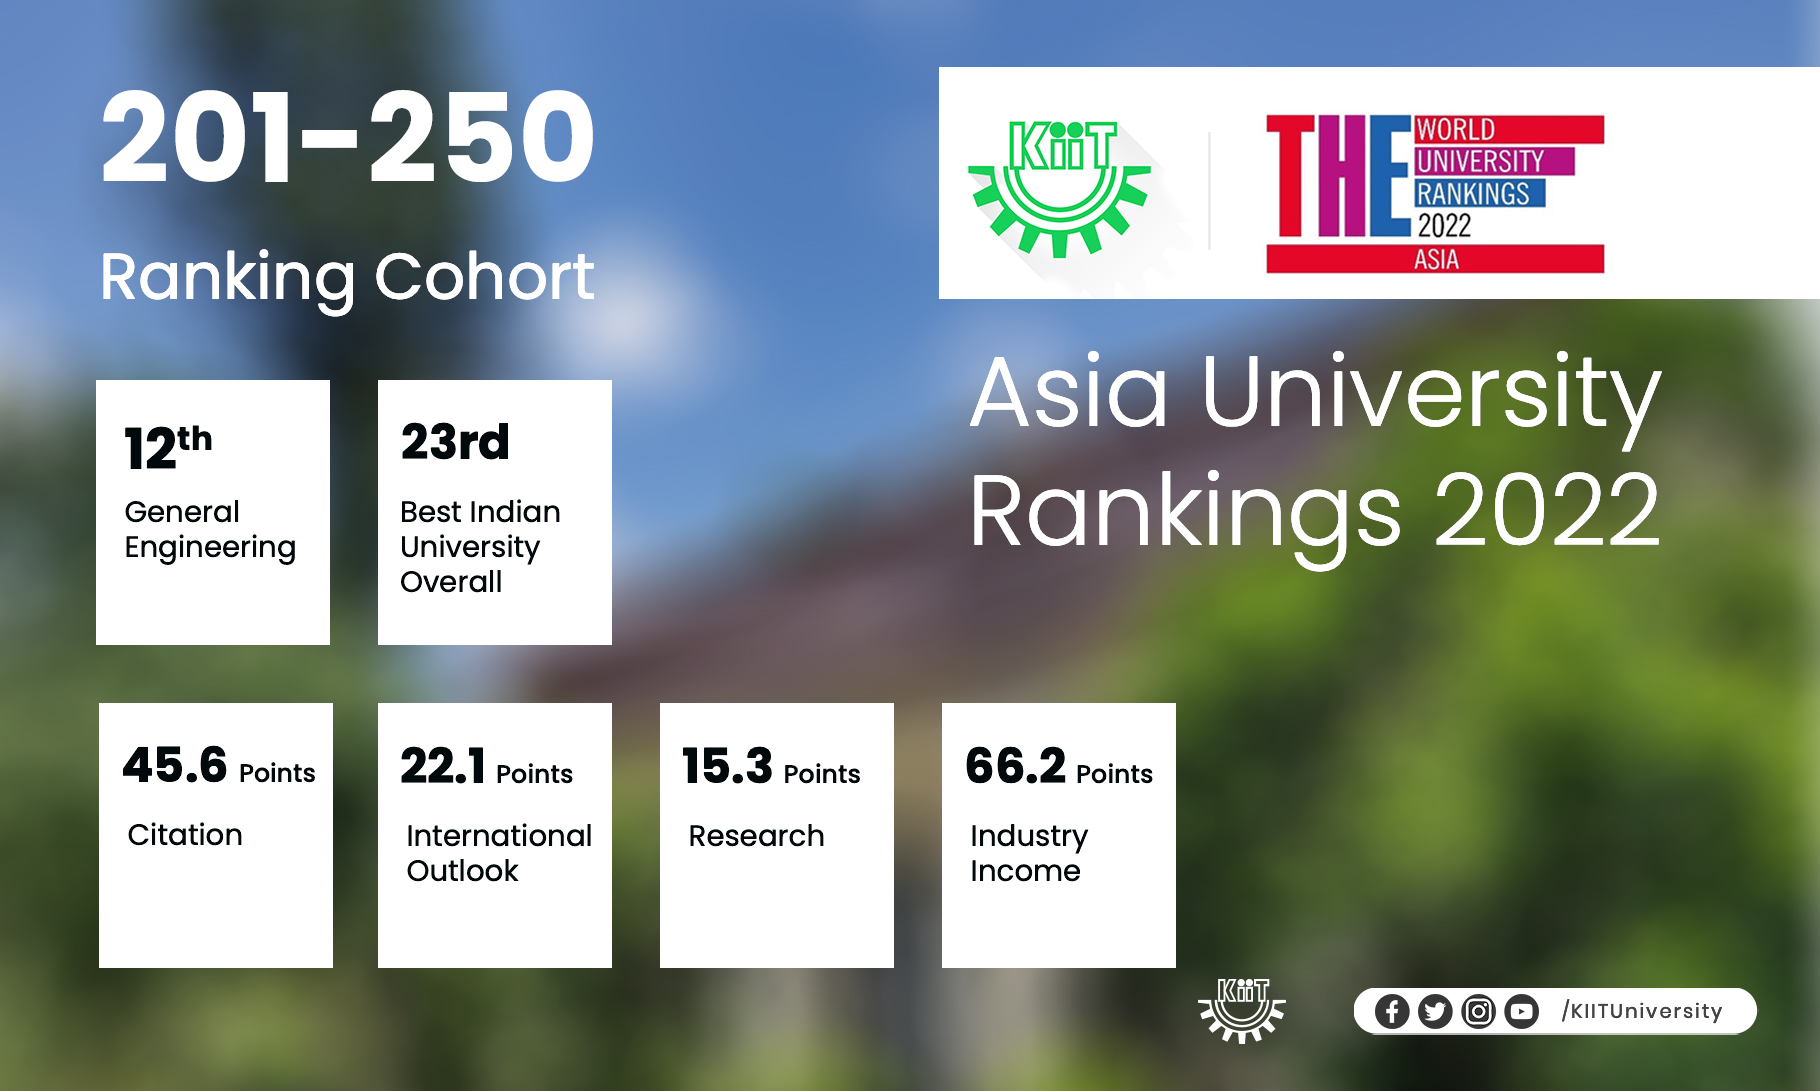 THE Asia University Rankings 2022